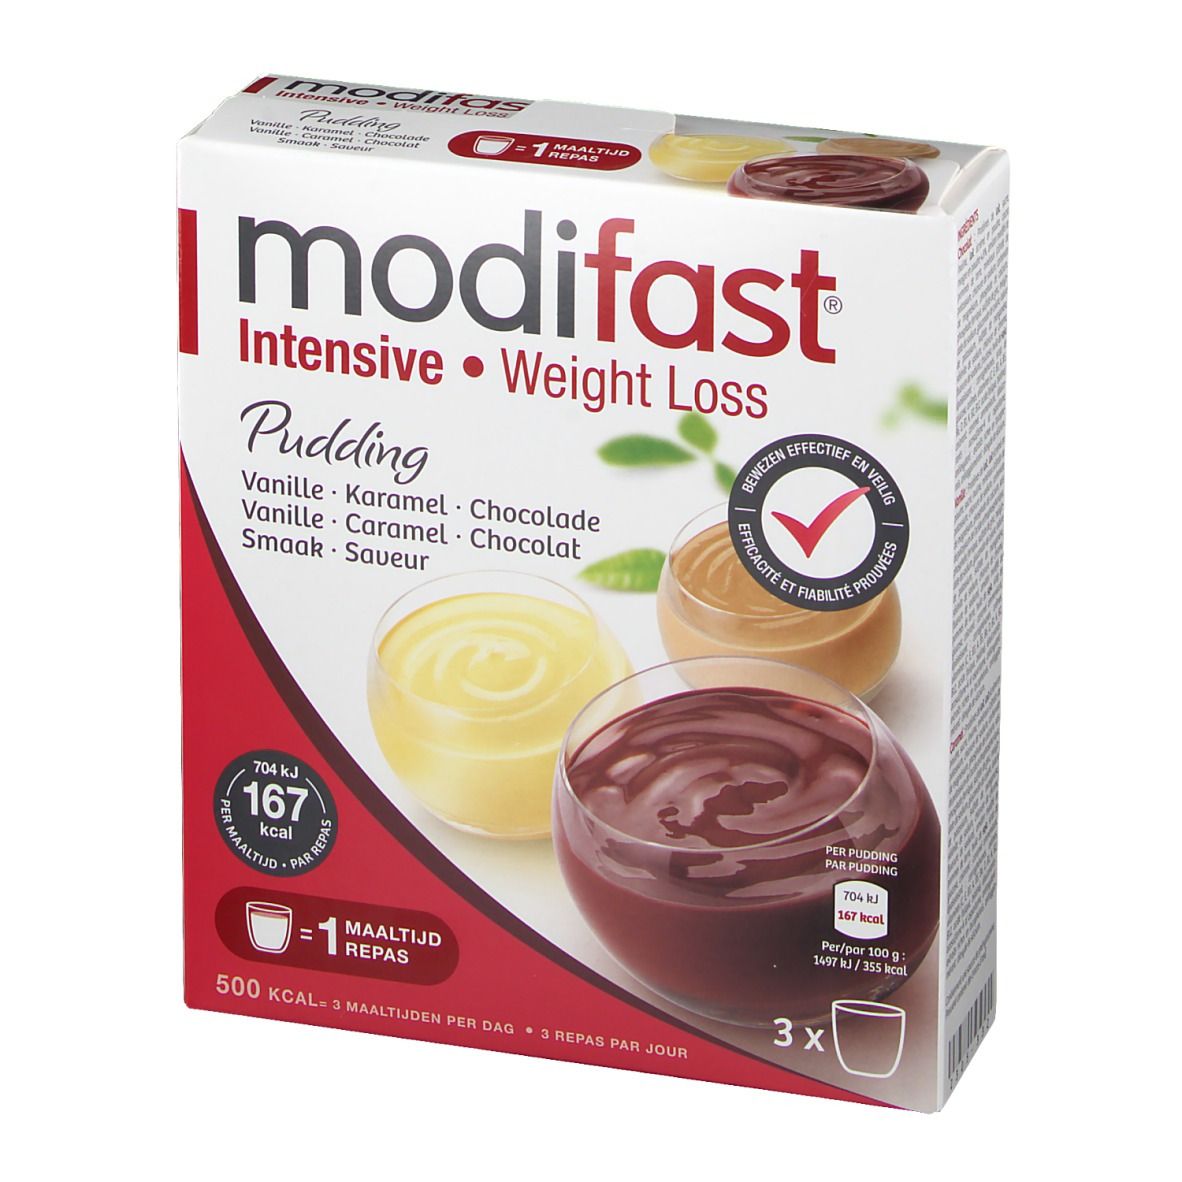 Modifast Intensive Pudding 3-Pack Chocolade-Karamel-Vanille